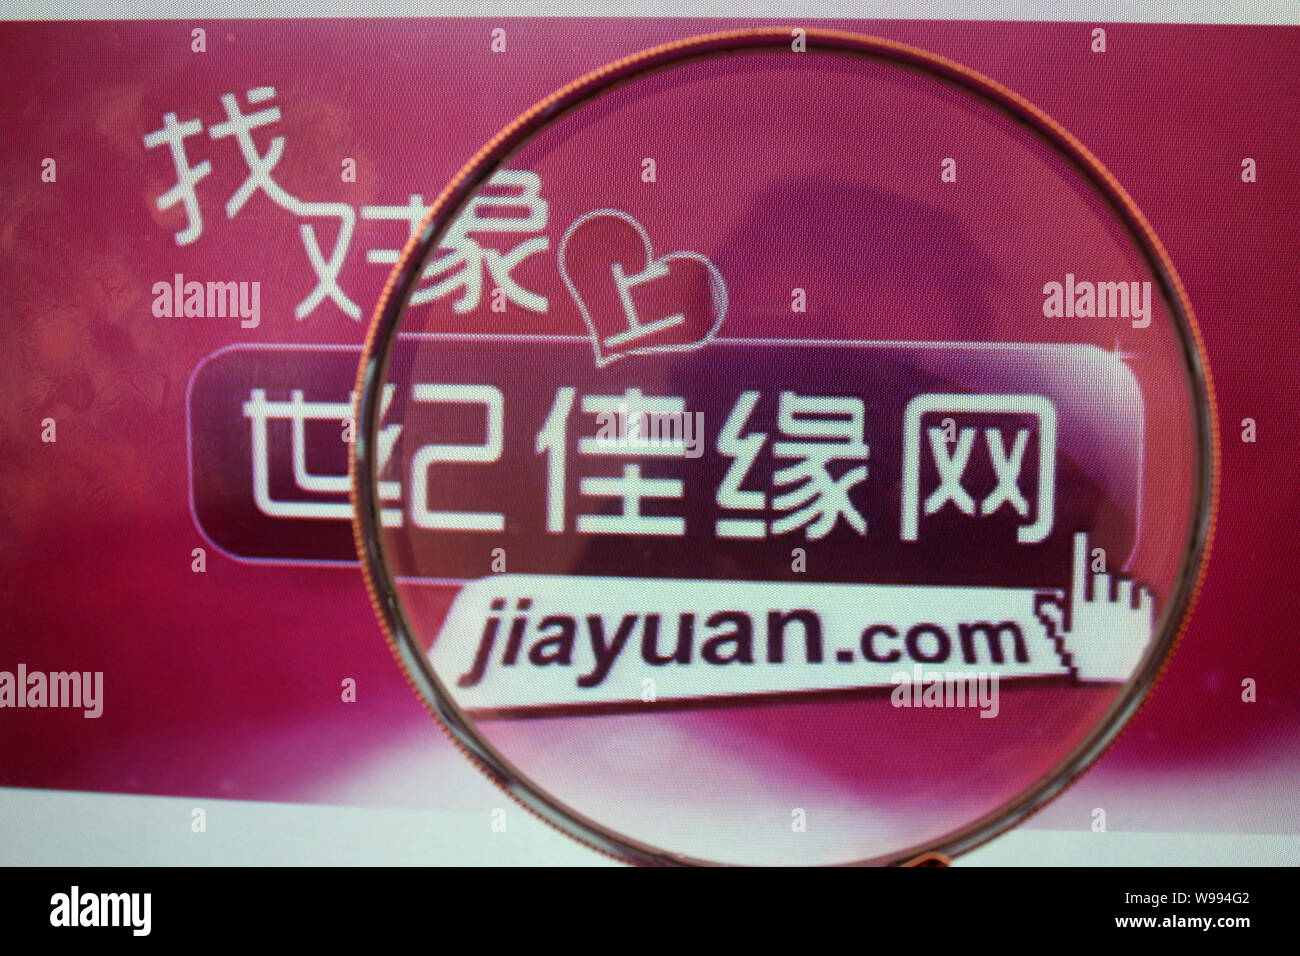 Lataa Jiayuan dating site